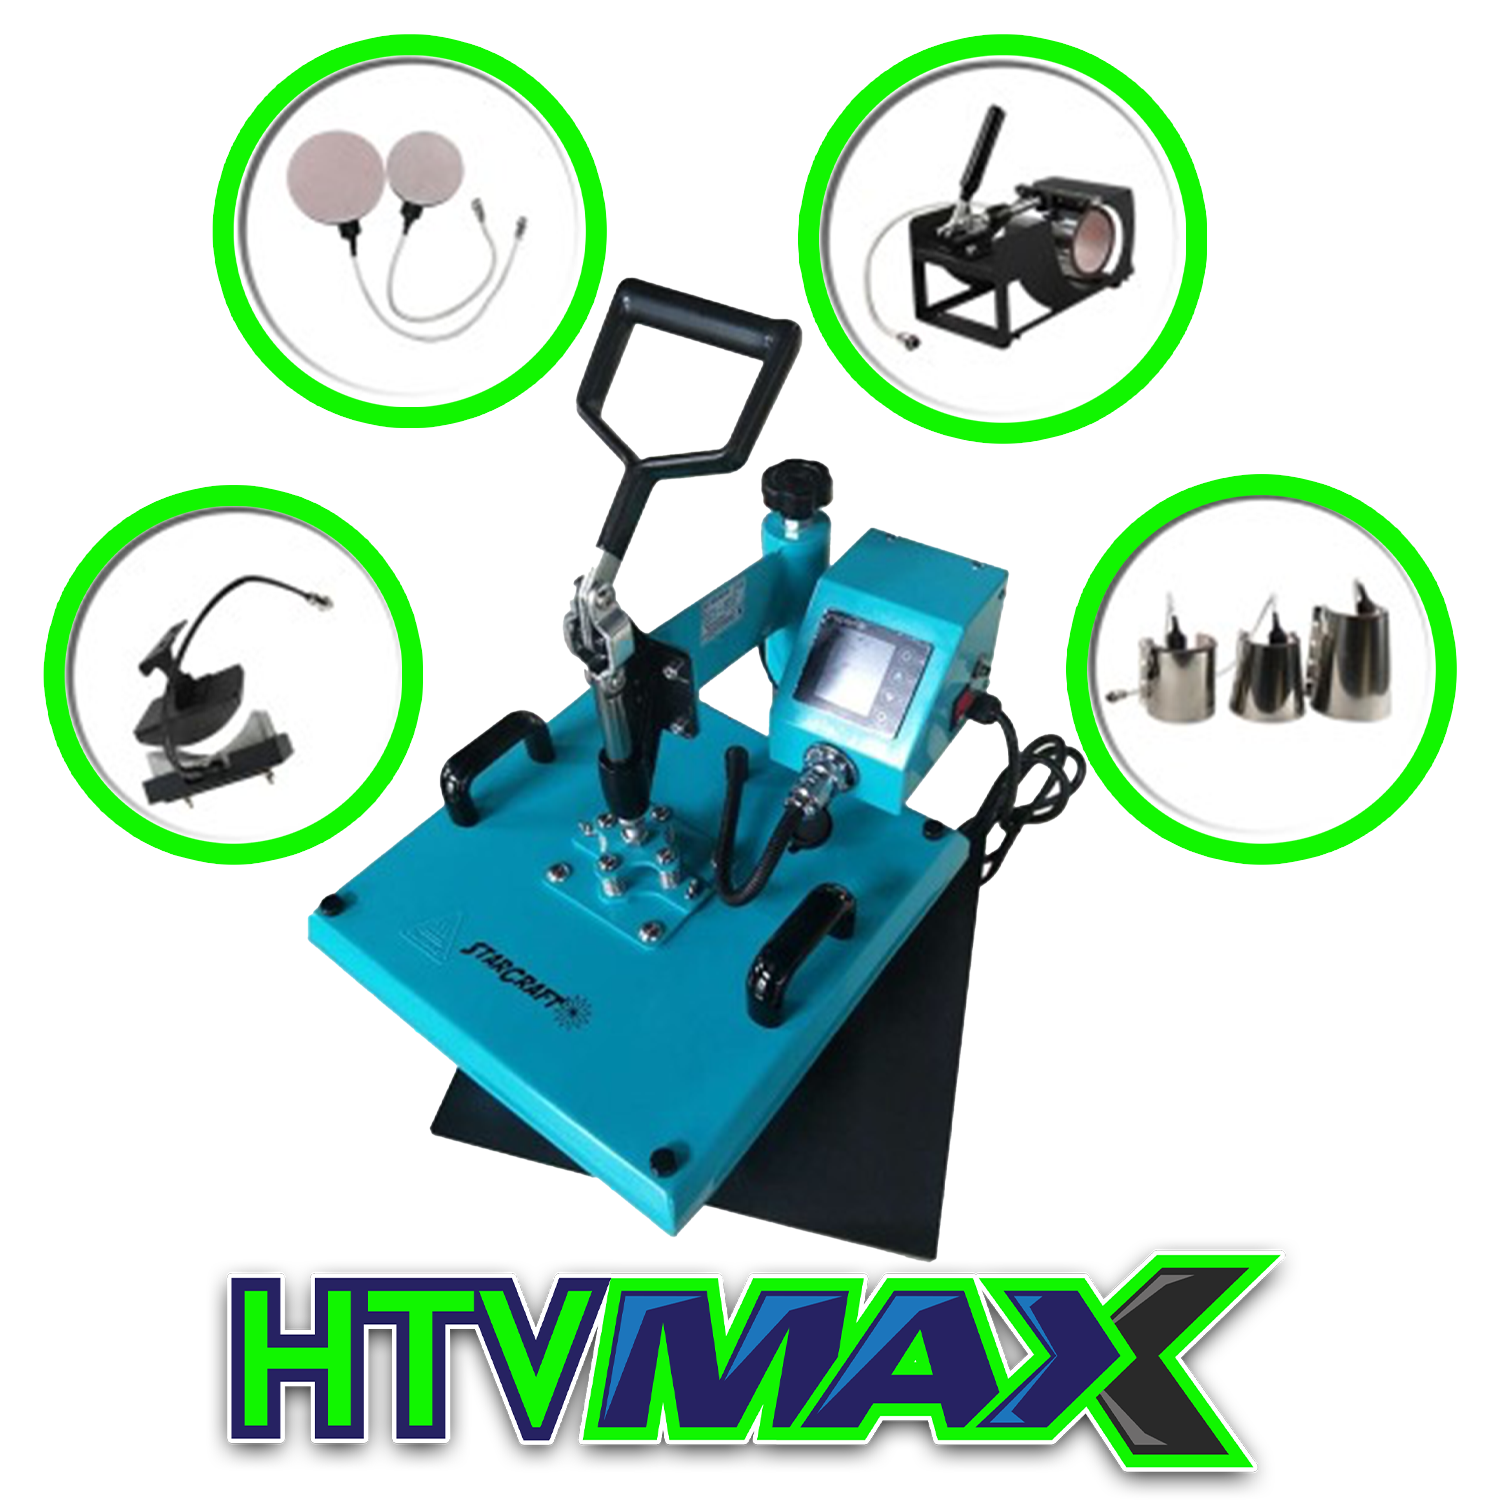 HTVRONT Auto Heat Press Machine for T Shirts - 15x15 Brazil